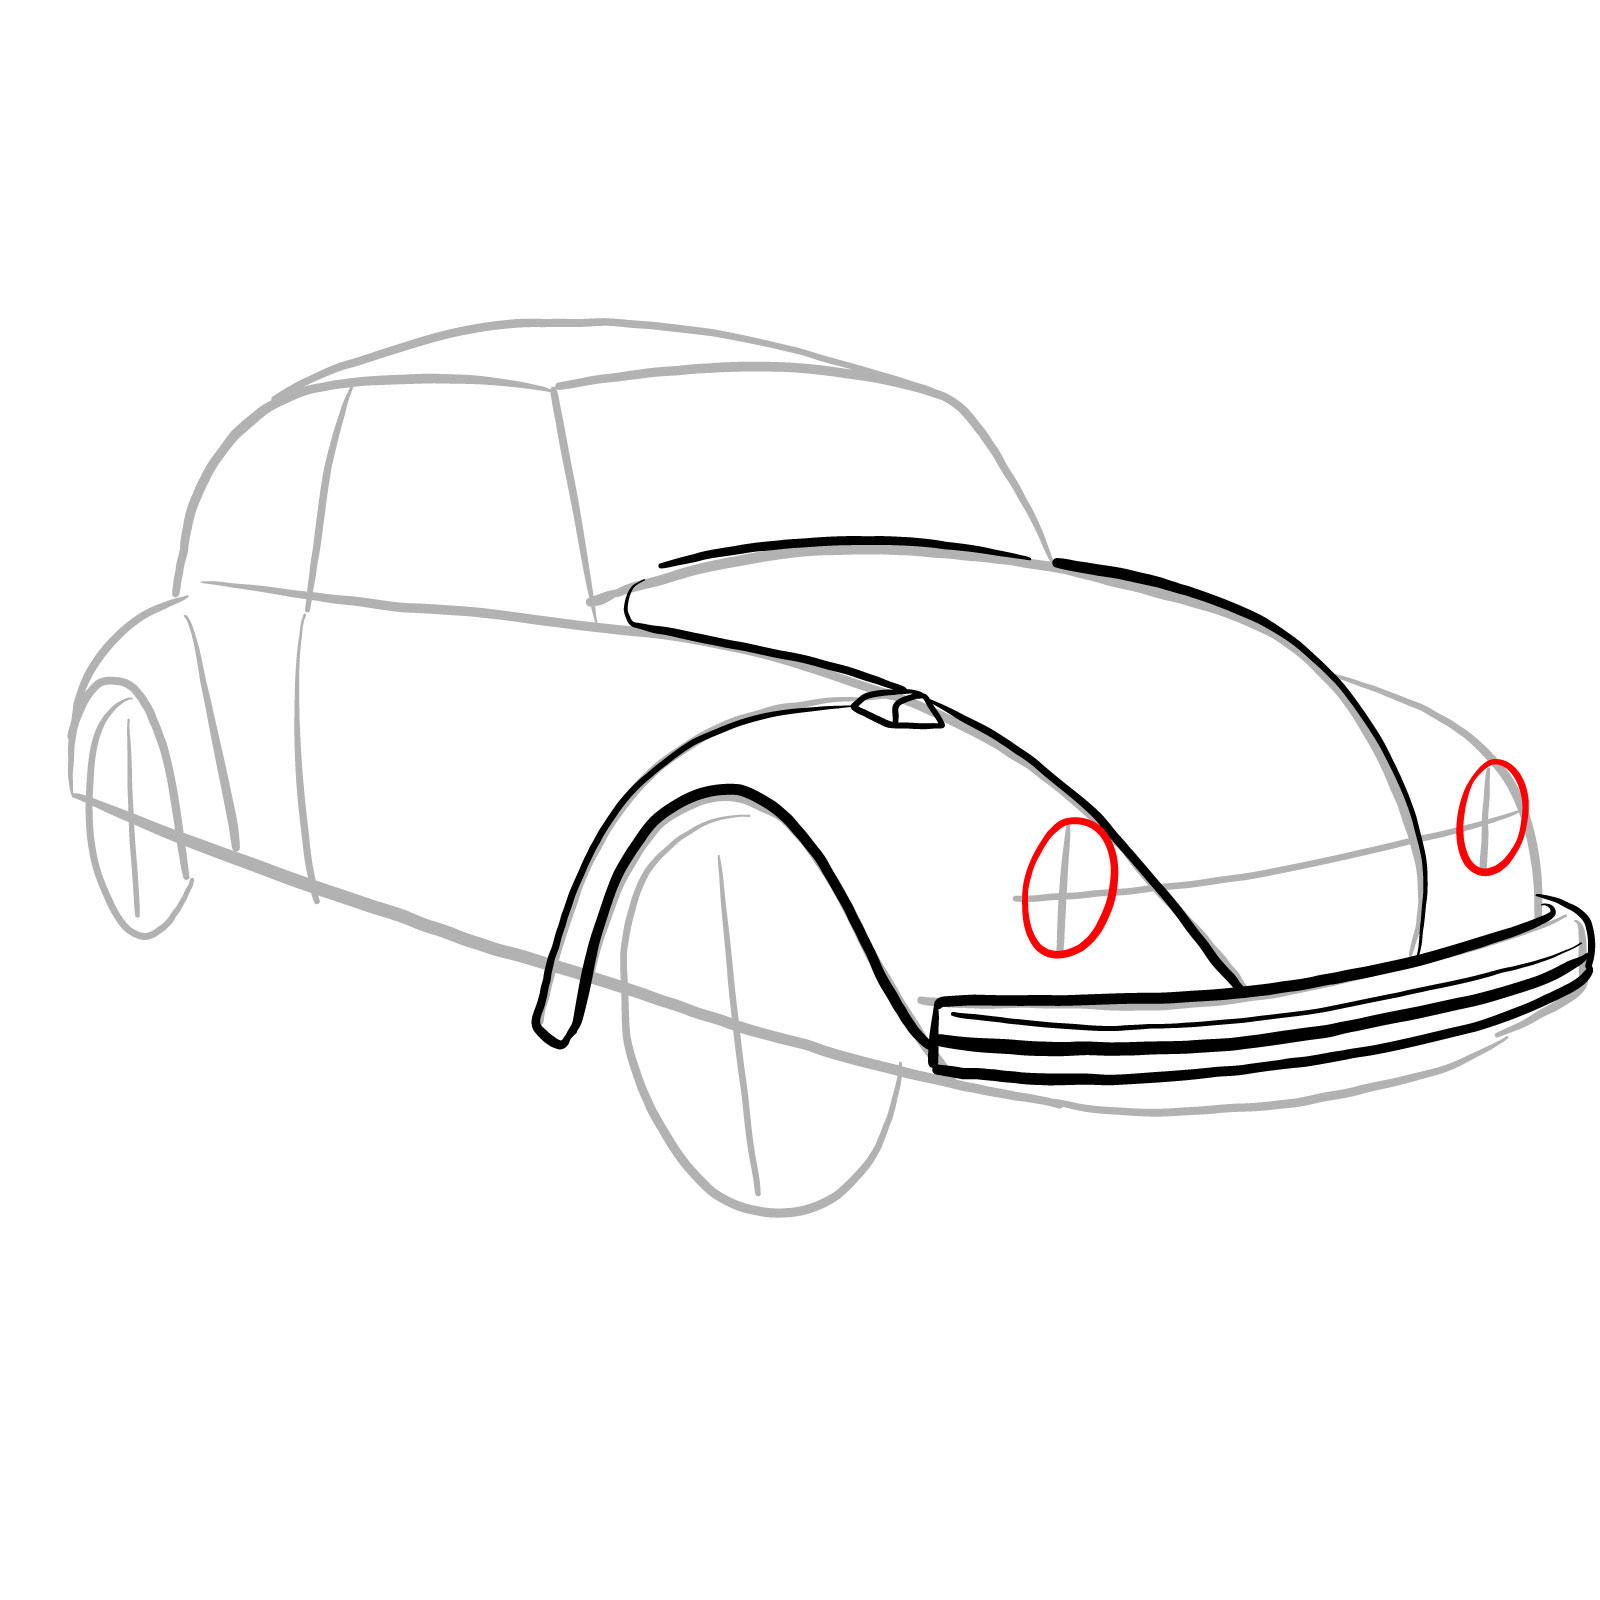 How to draw Volkswagen Beetle 1972 - step 12